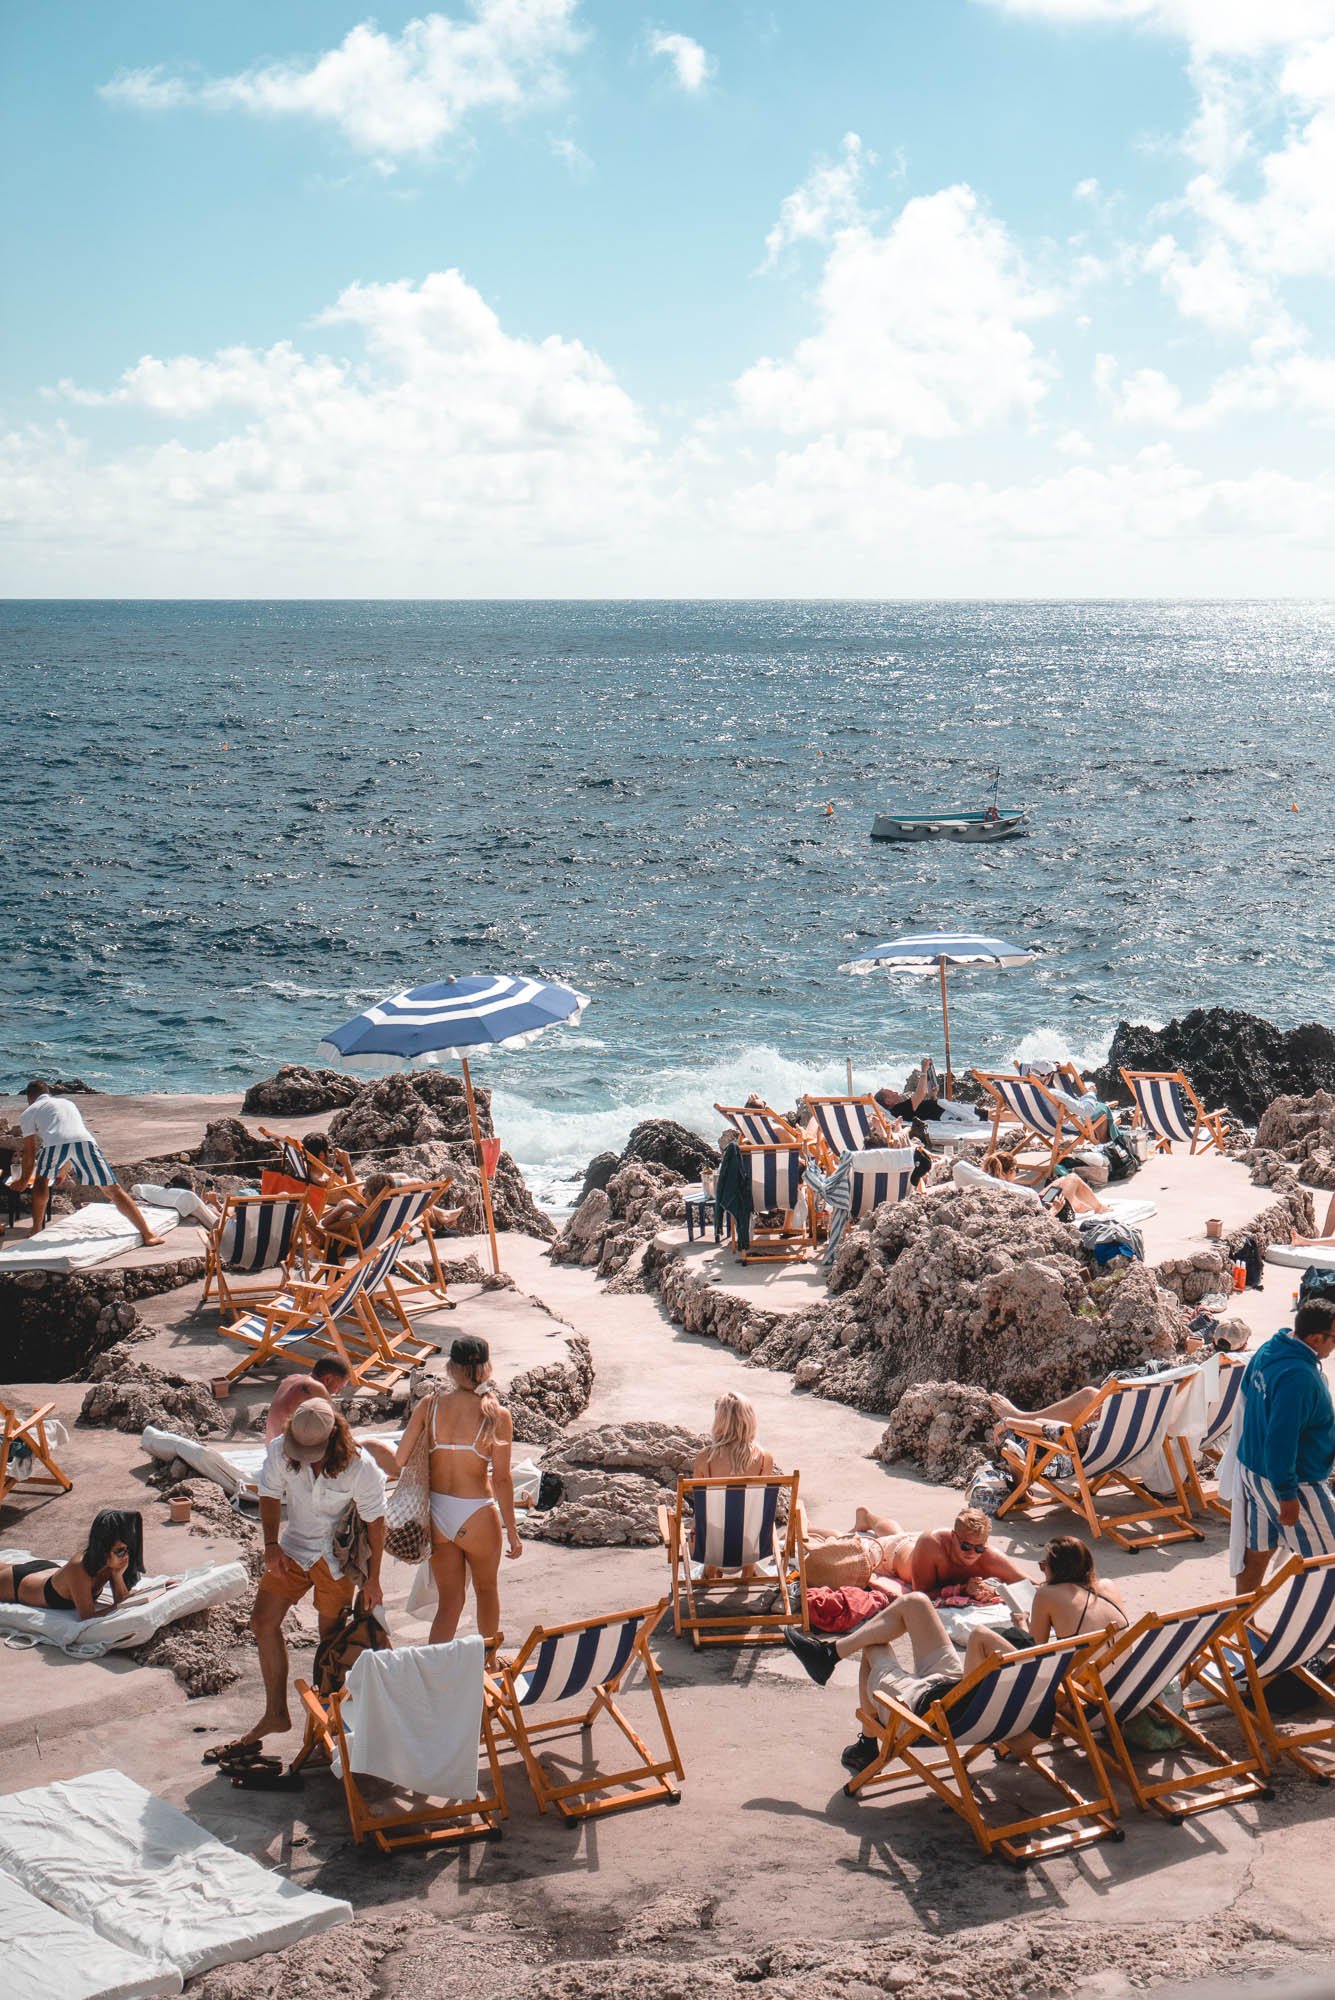 A day trip to Capri from Positano should include a visit to the iconic La Fontelina Beach Club Capri